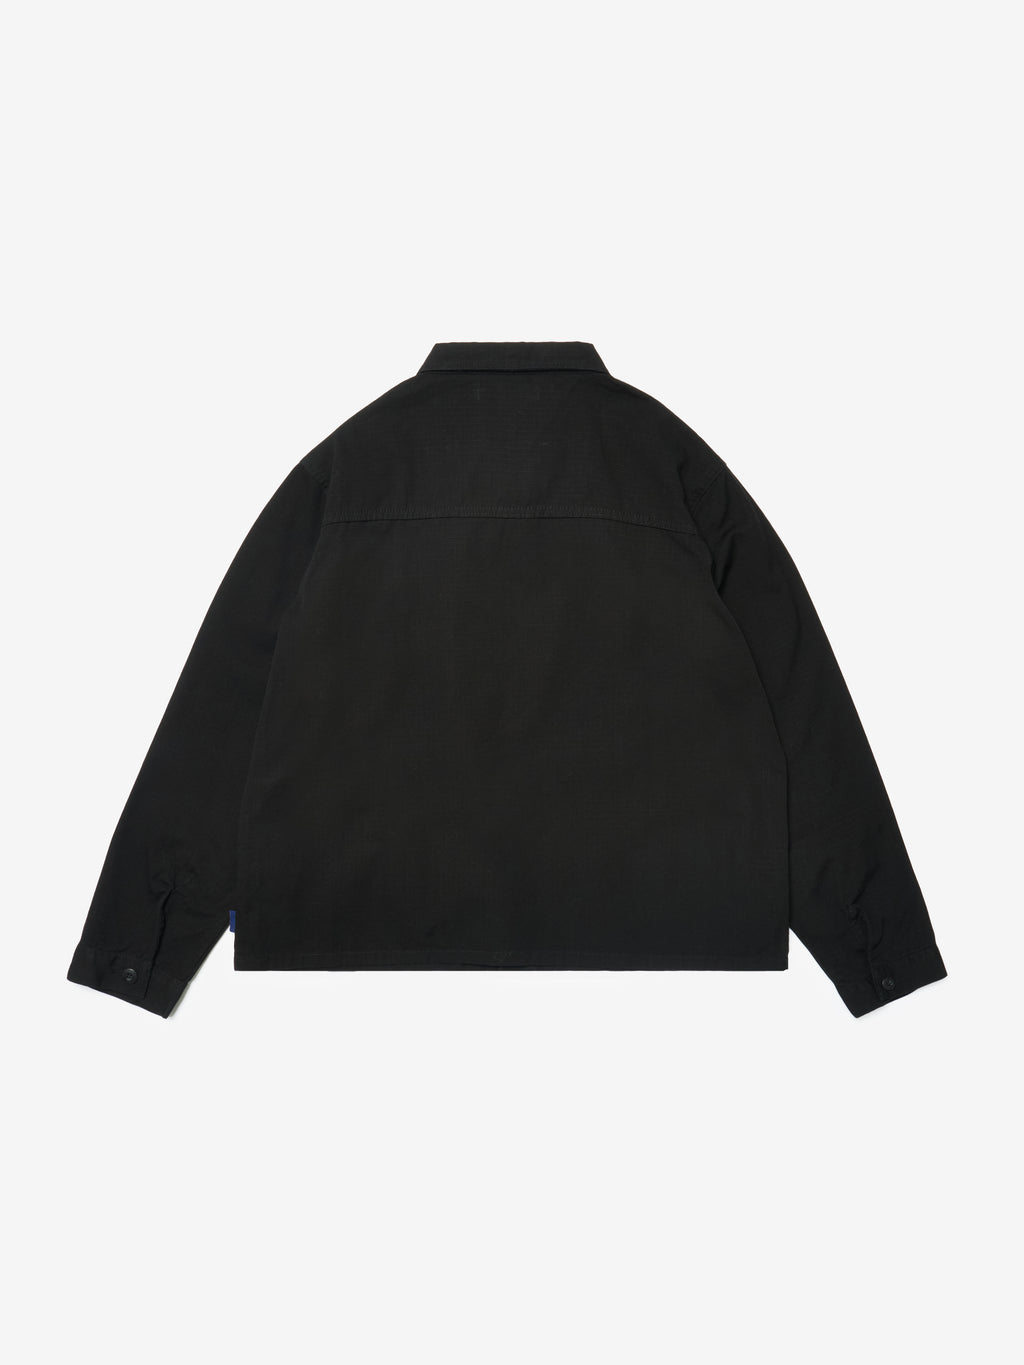 Huxley Ripstop Shirt - Black